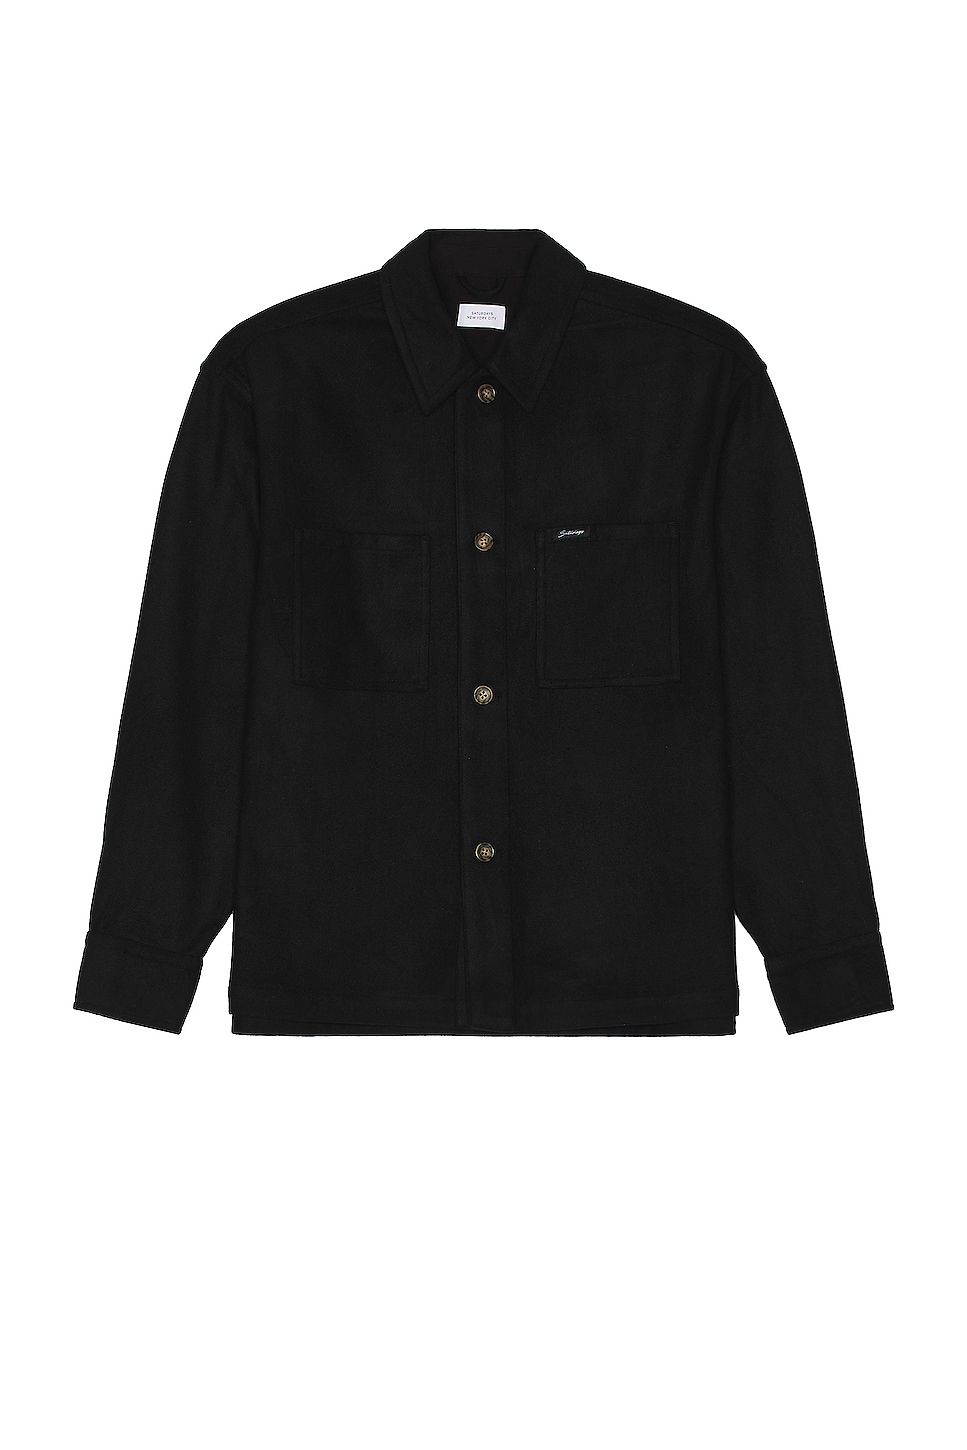 Image 1 of SATURDAYS NYC Driessen Wool Overshirt in Black